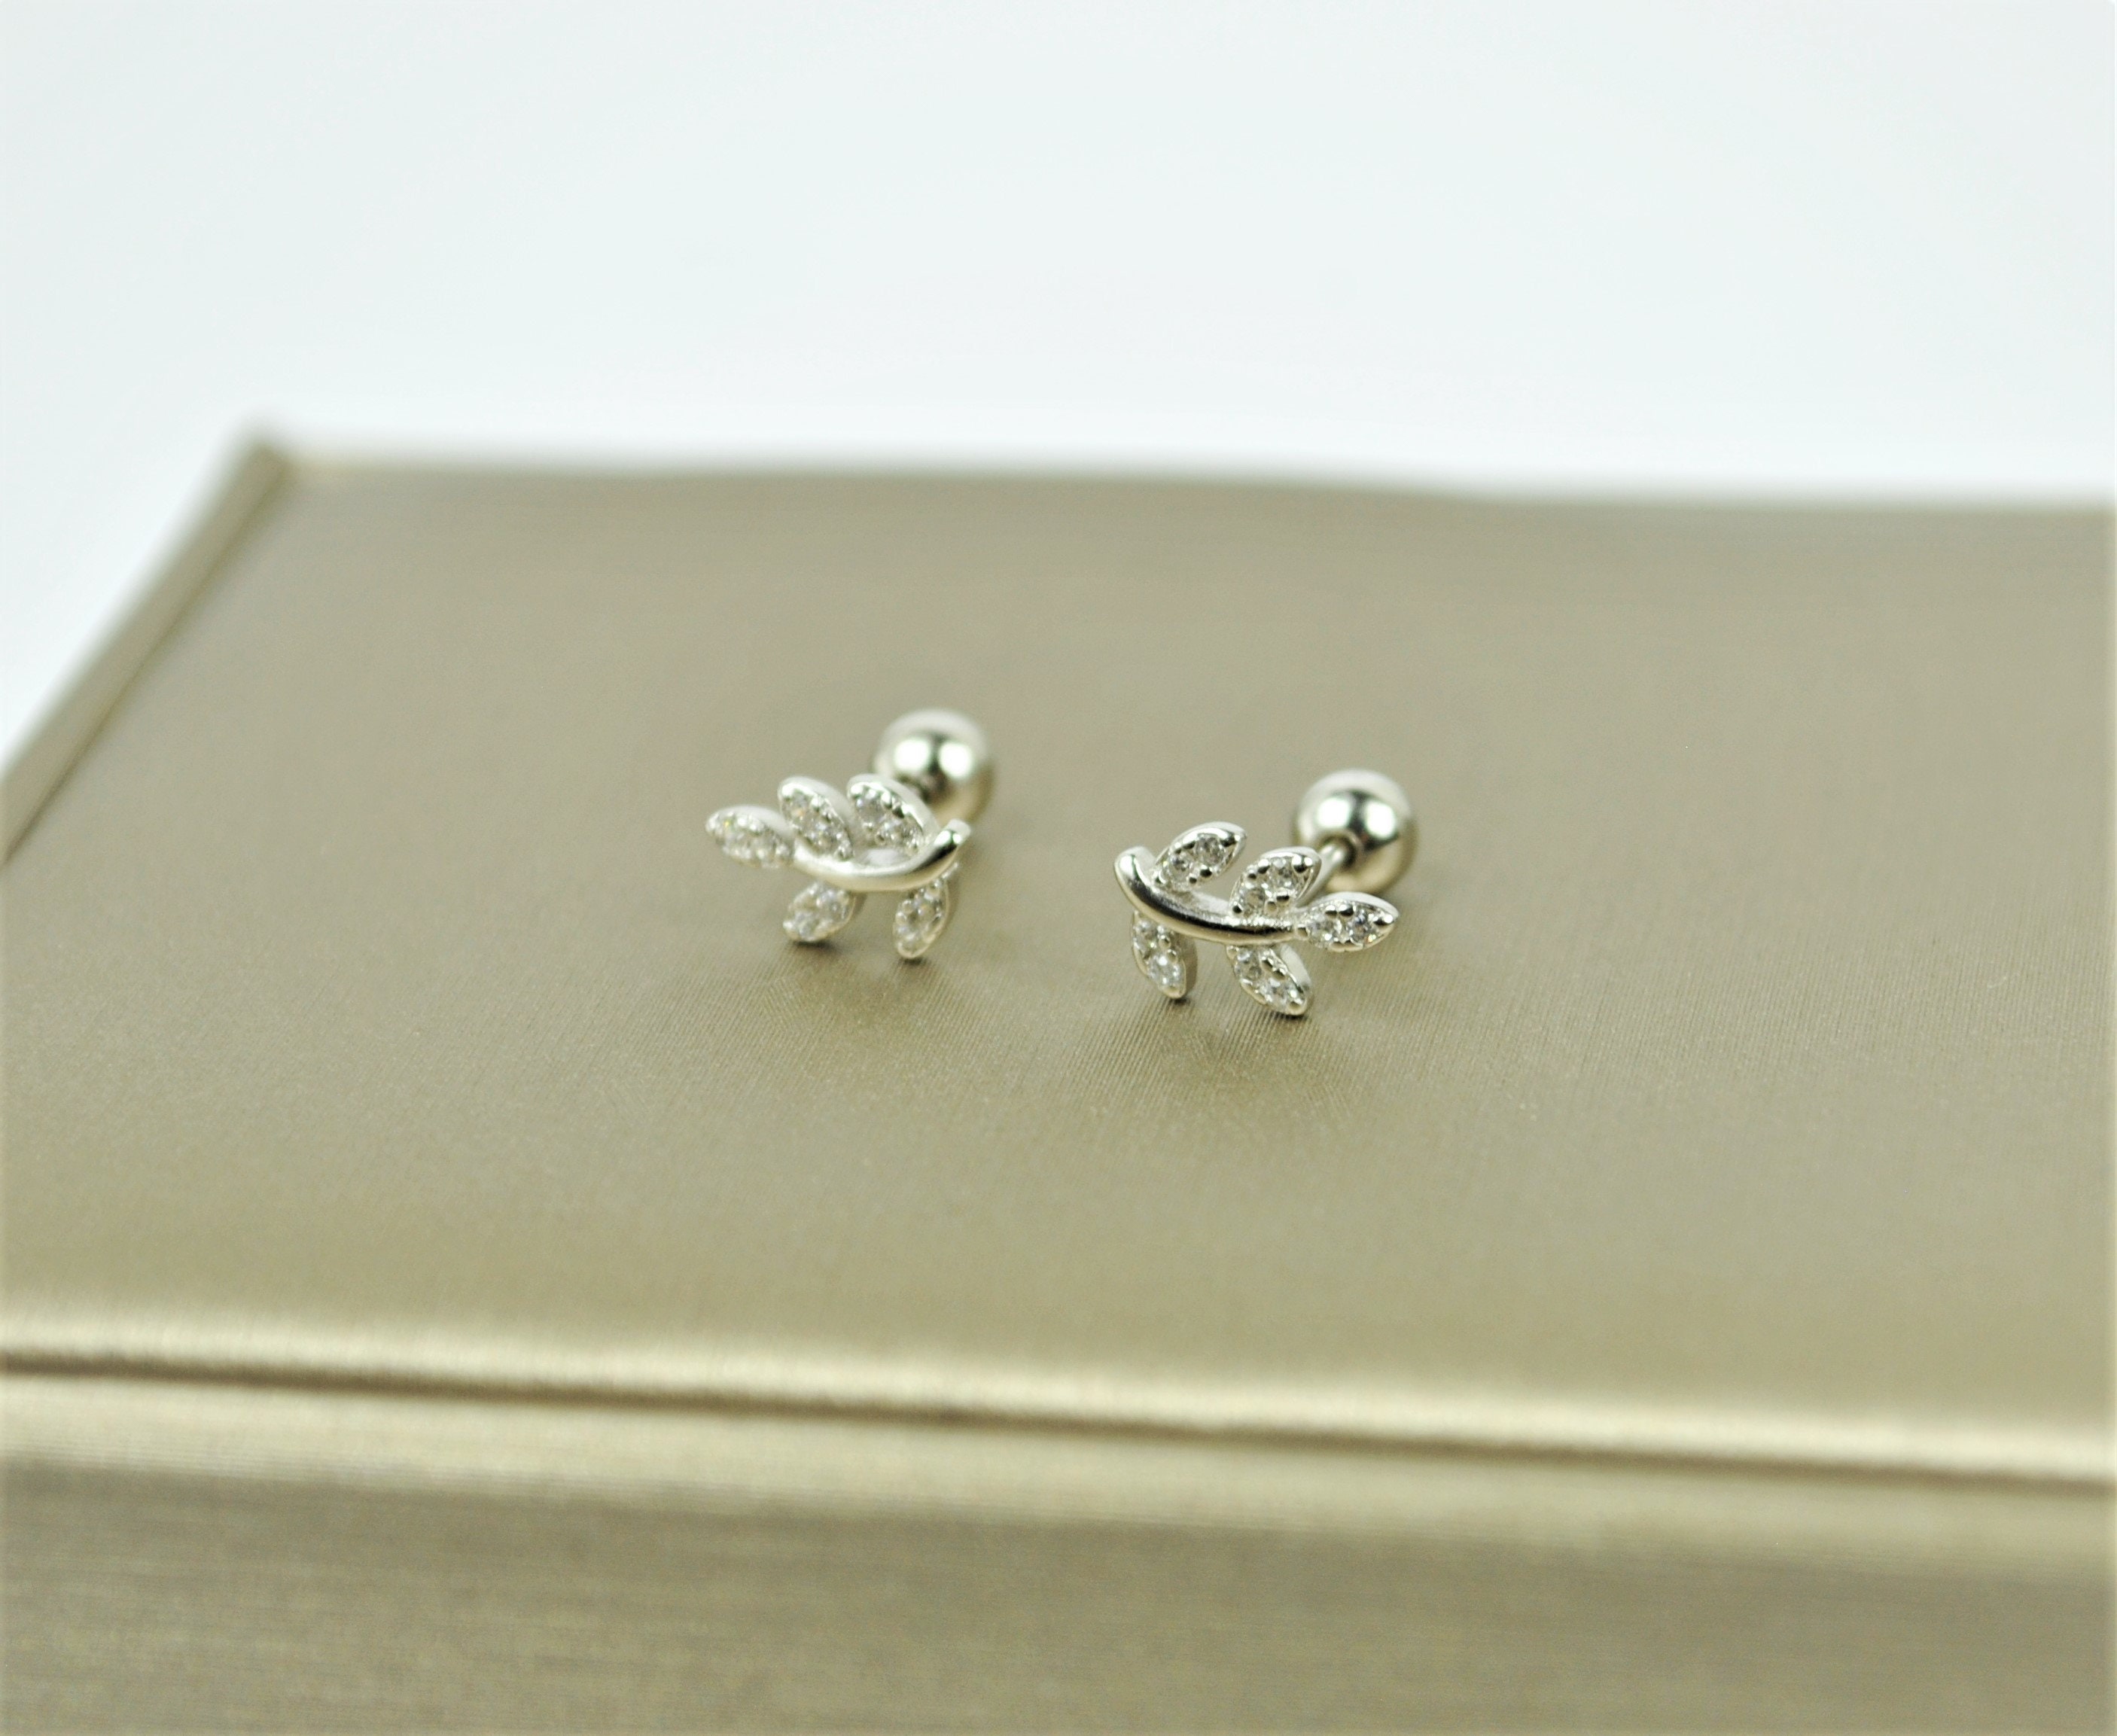 Vintage Silver Leaf Pin and Twist Back Earrings in Lee Jewelers Box